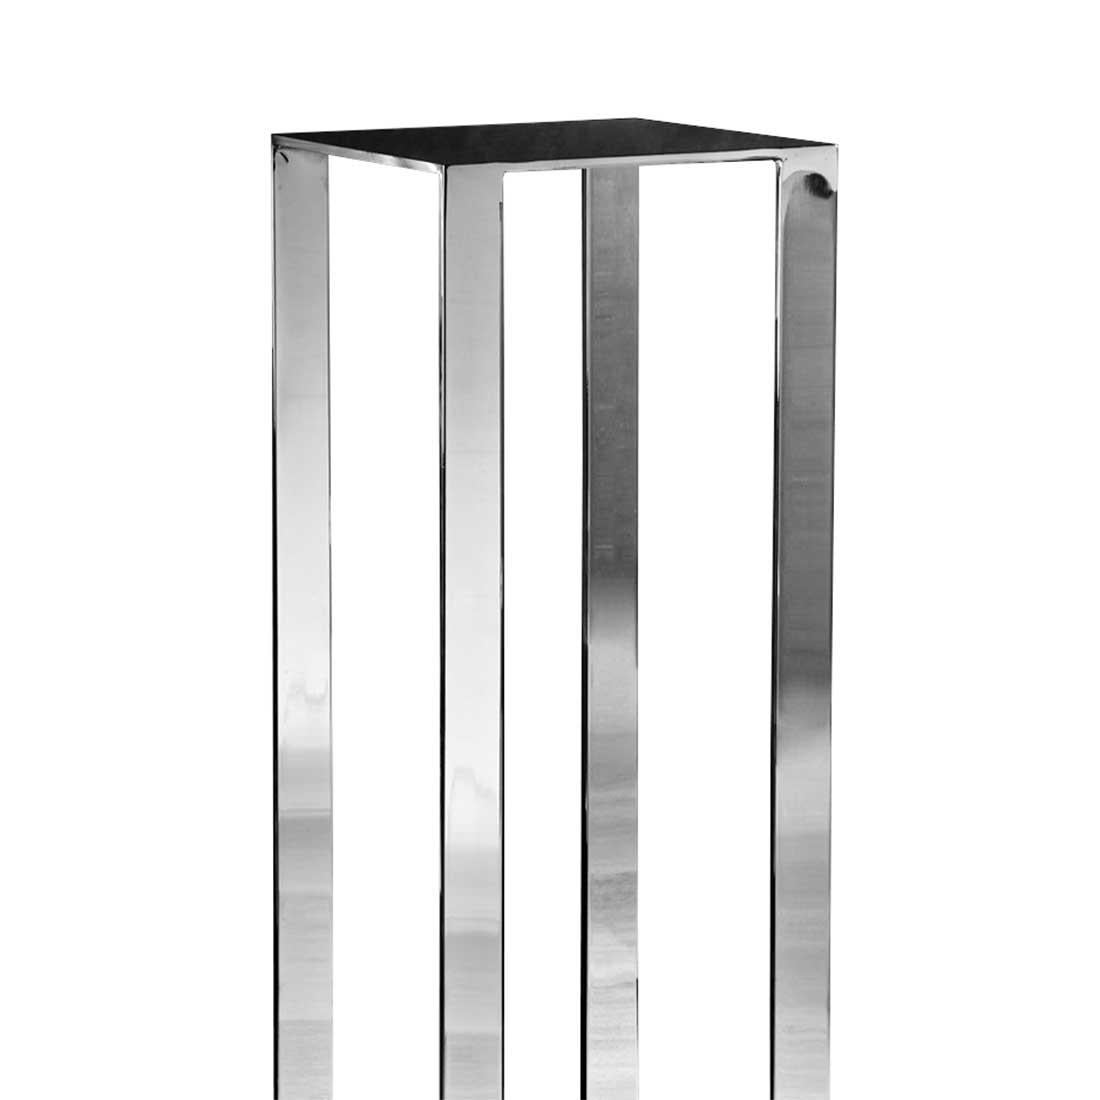 Pedestal chrome pillar in polished
chrome finish.